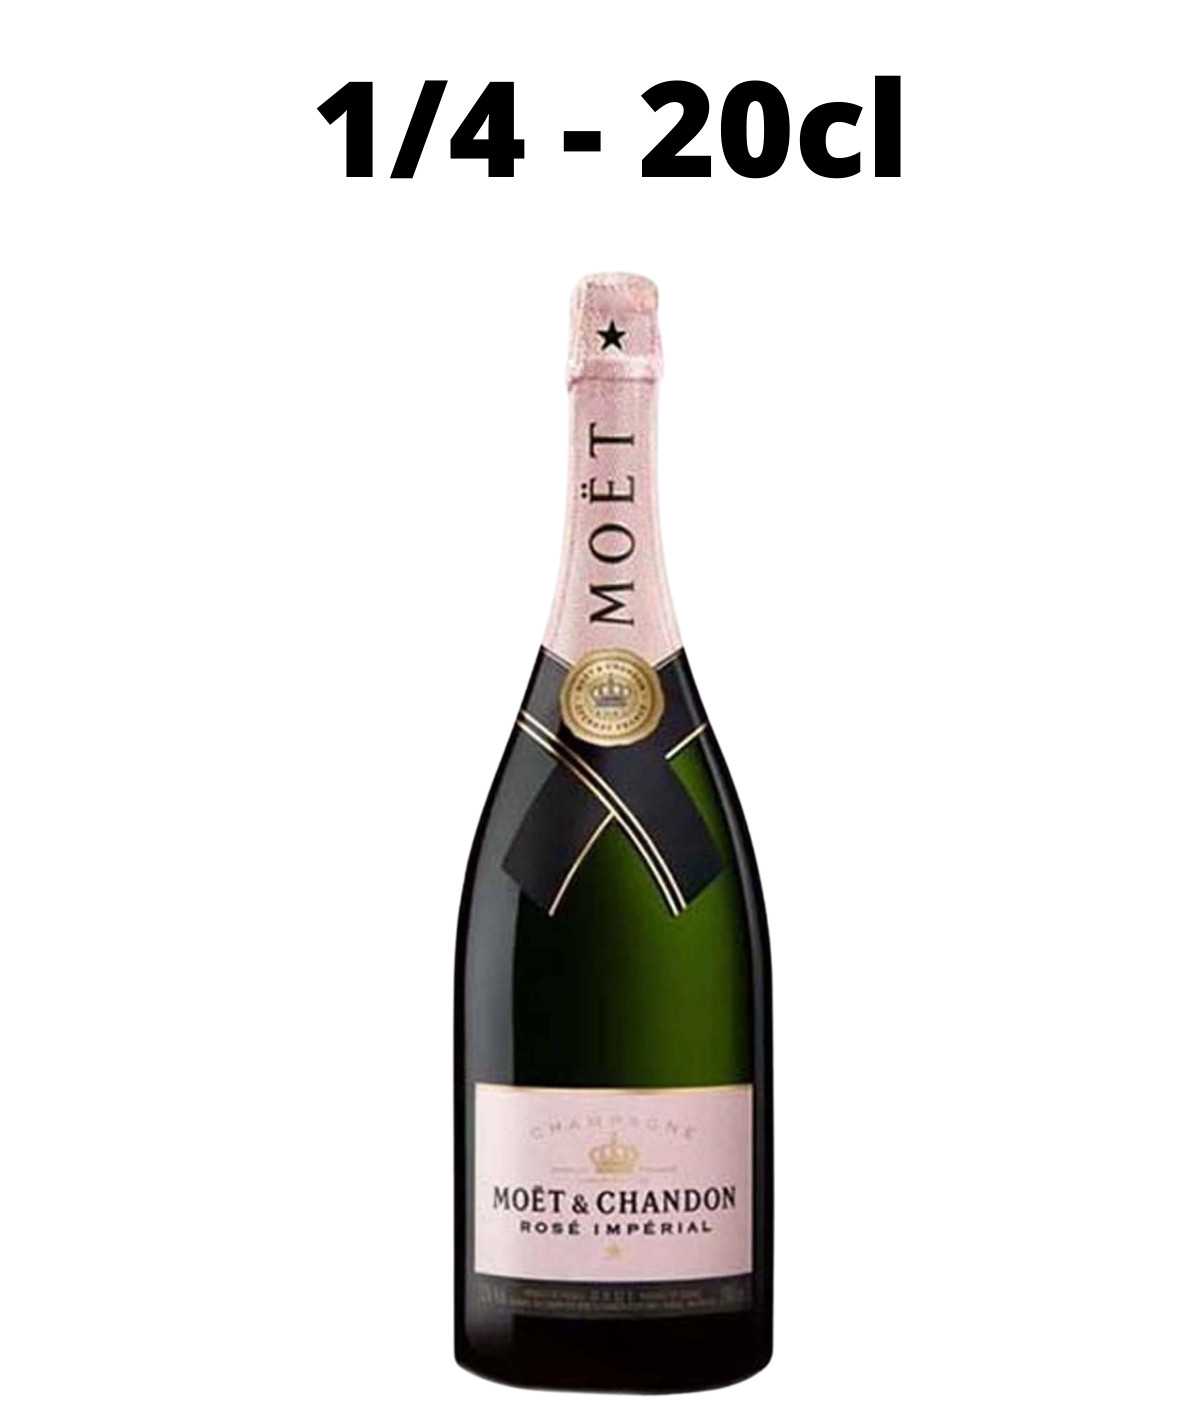 Viertelflasche MOET & CHANDON Champagne Rose Imperial